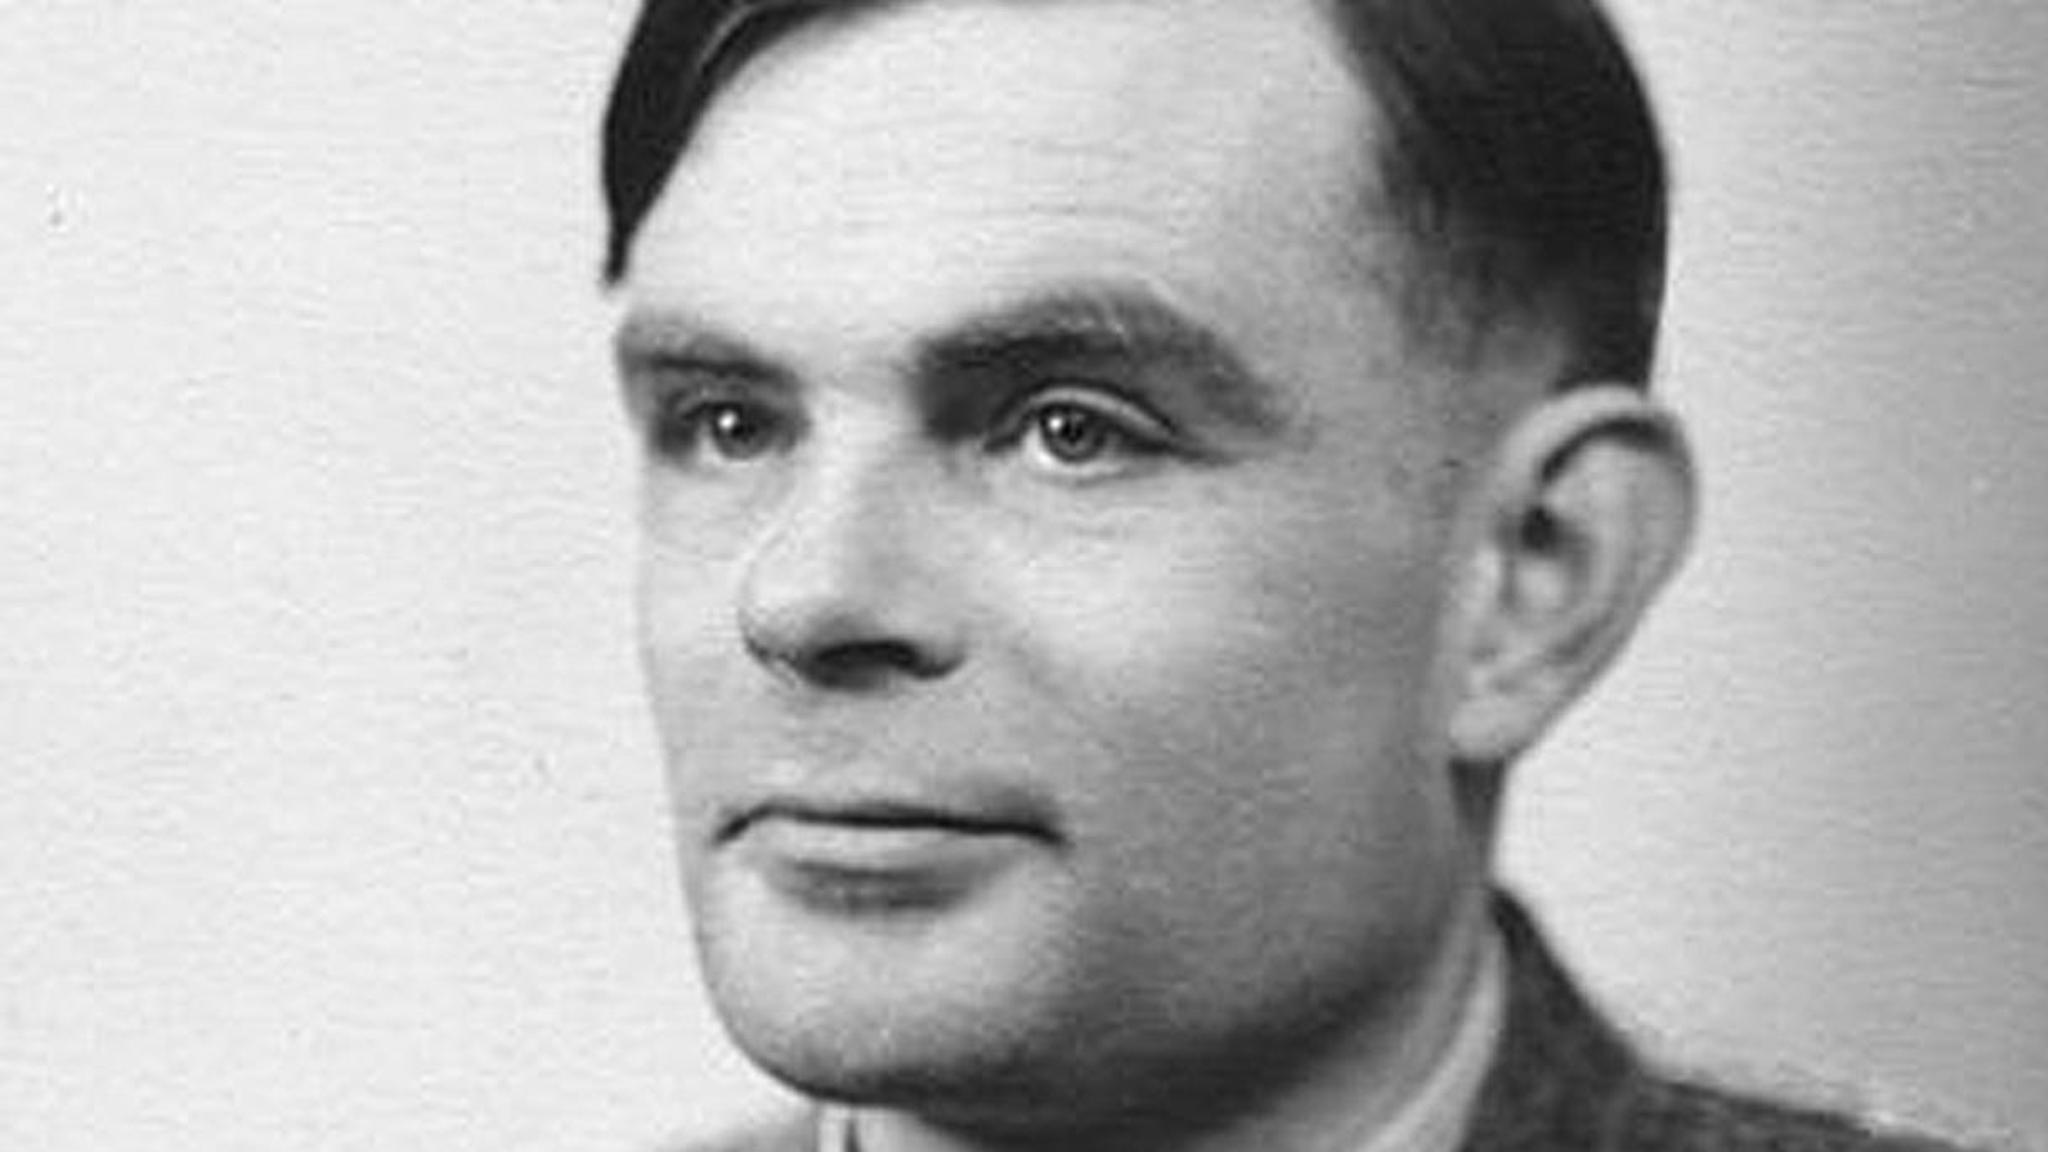 Alan Turing granted posthumous pardon